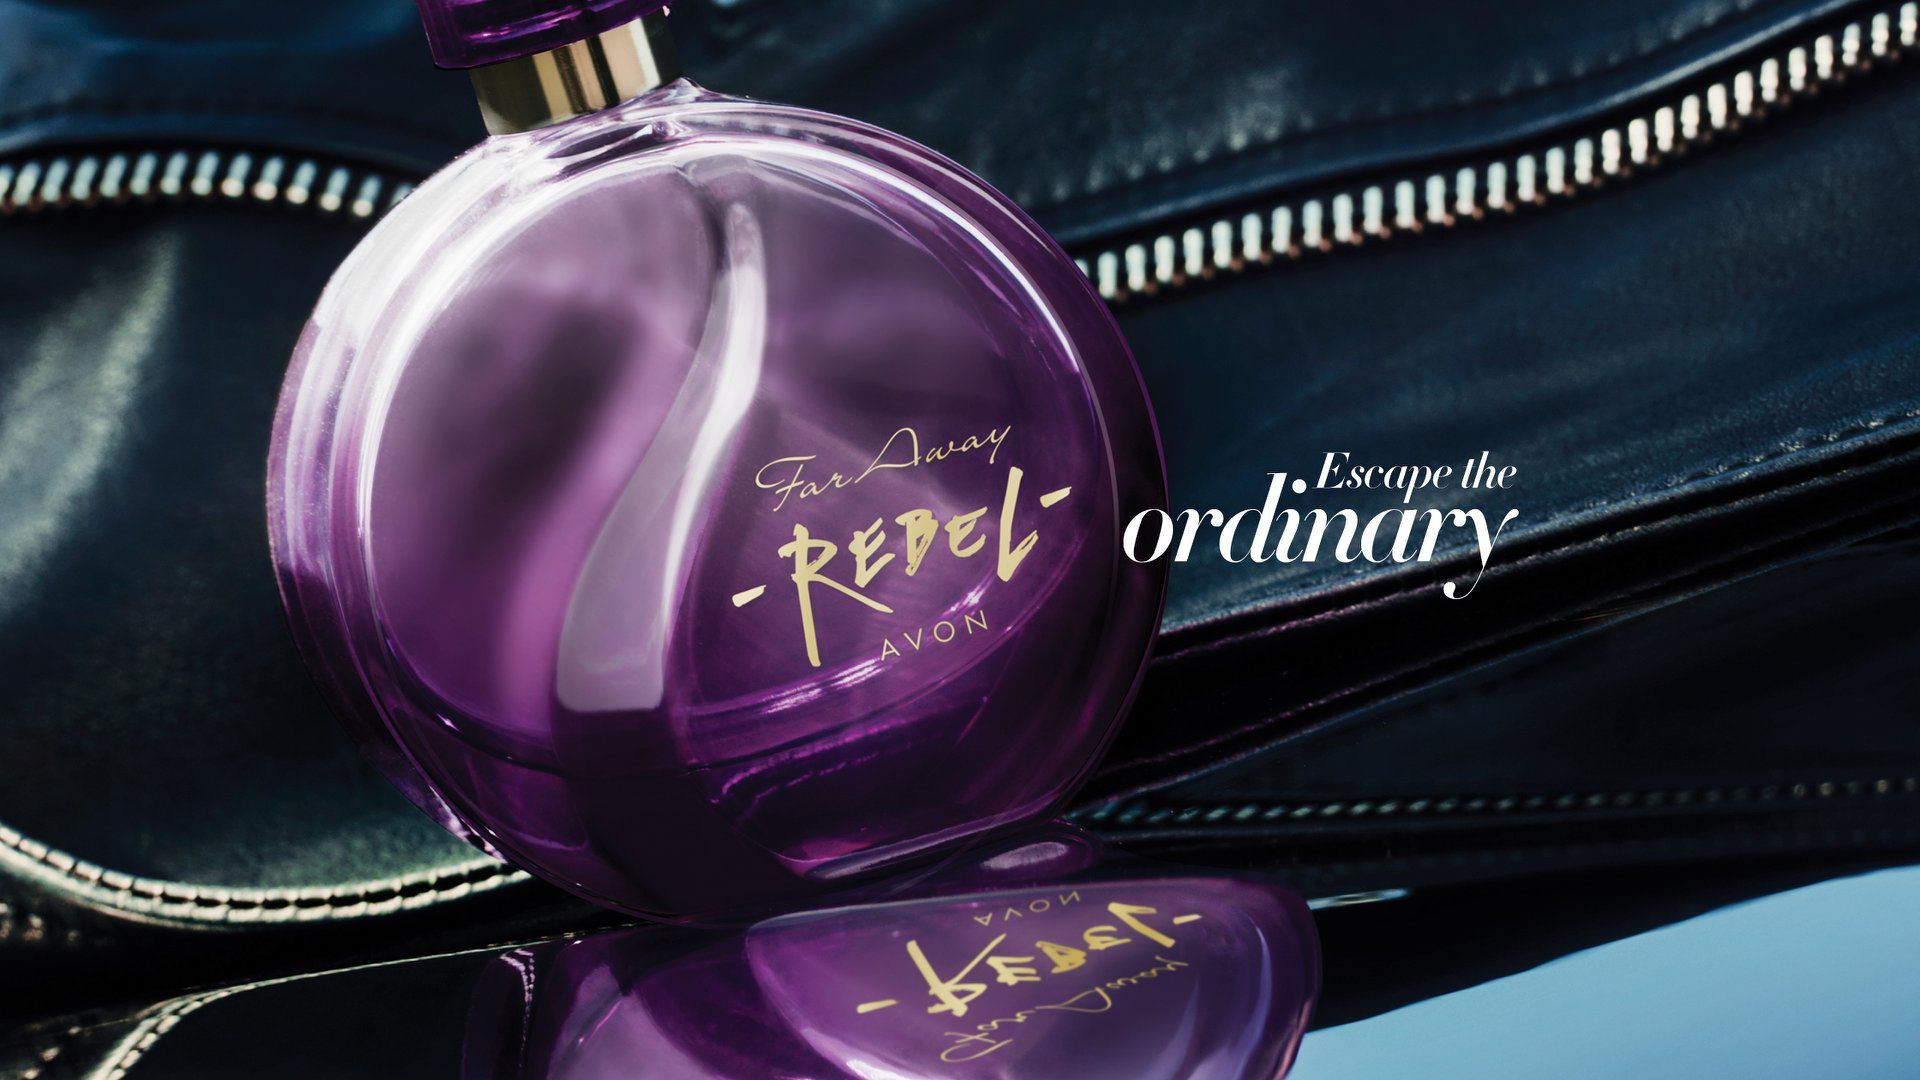 perfume avon far away rebel